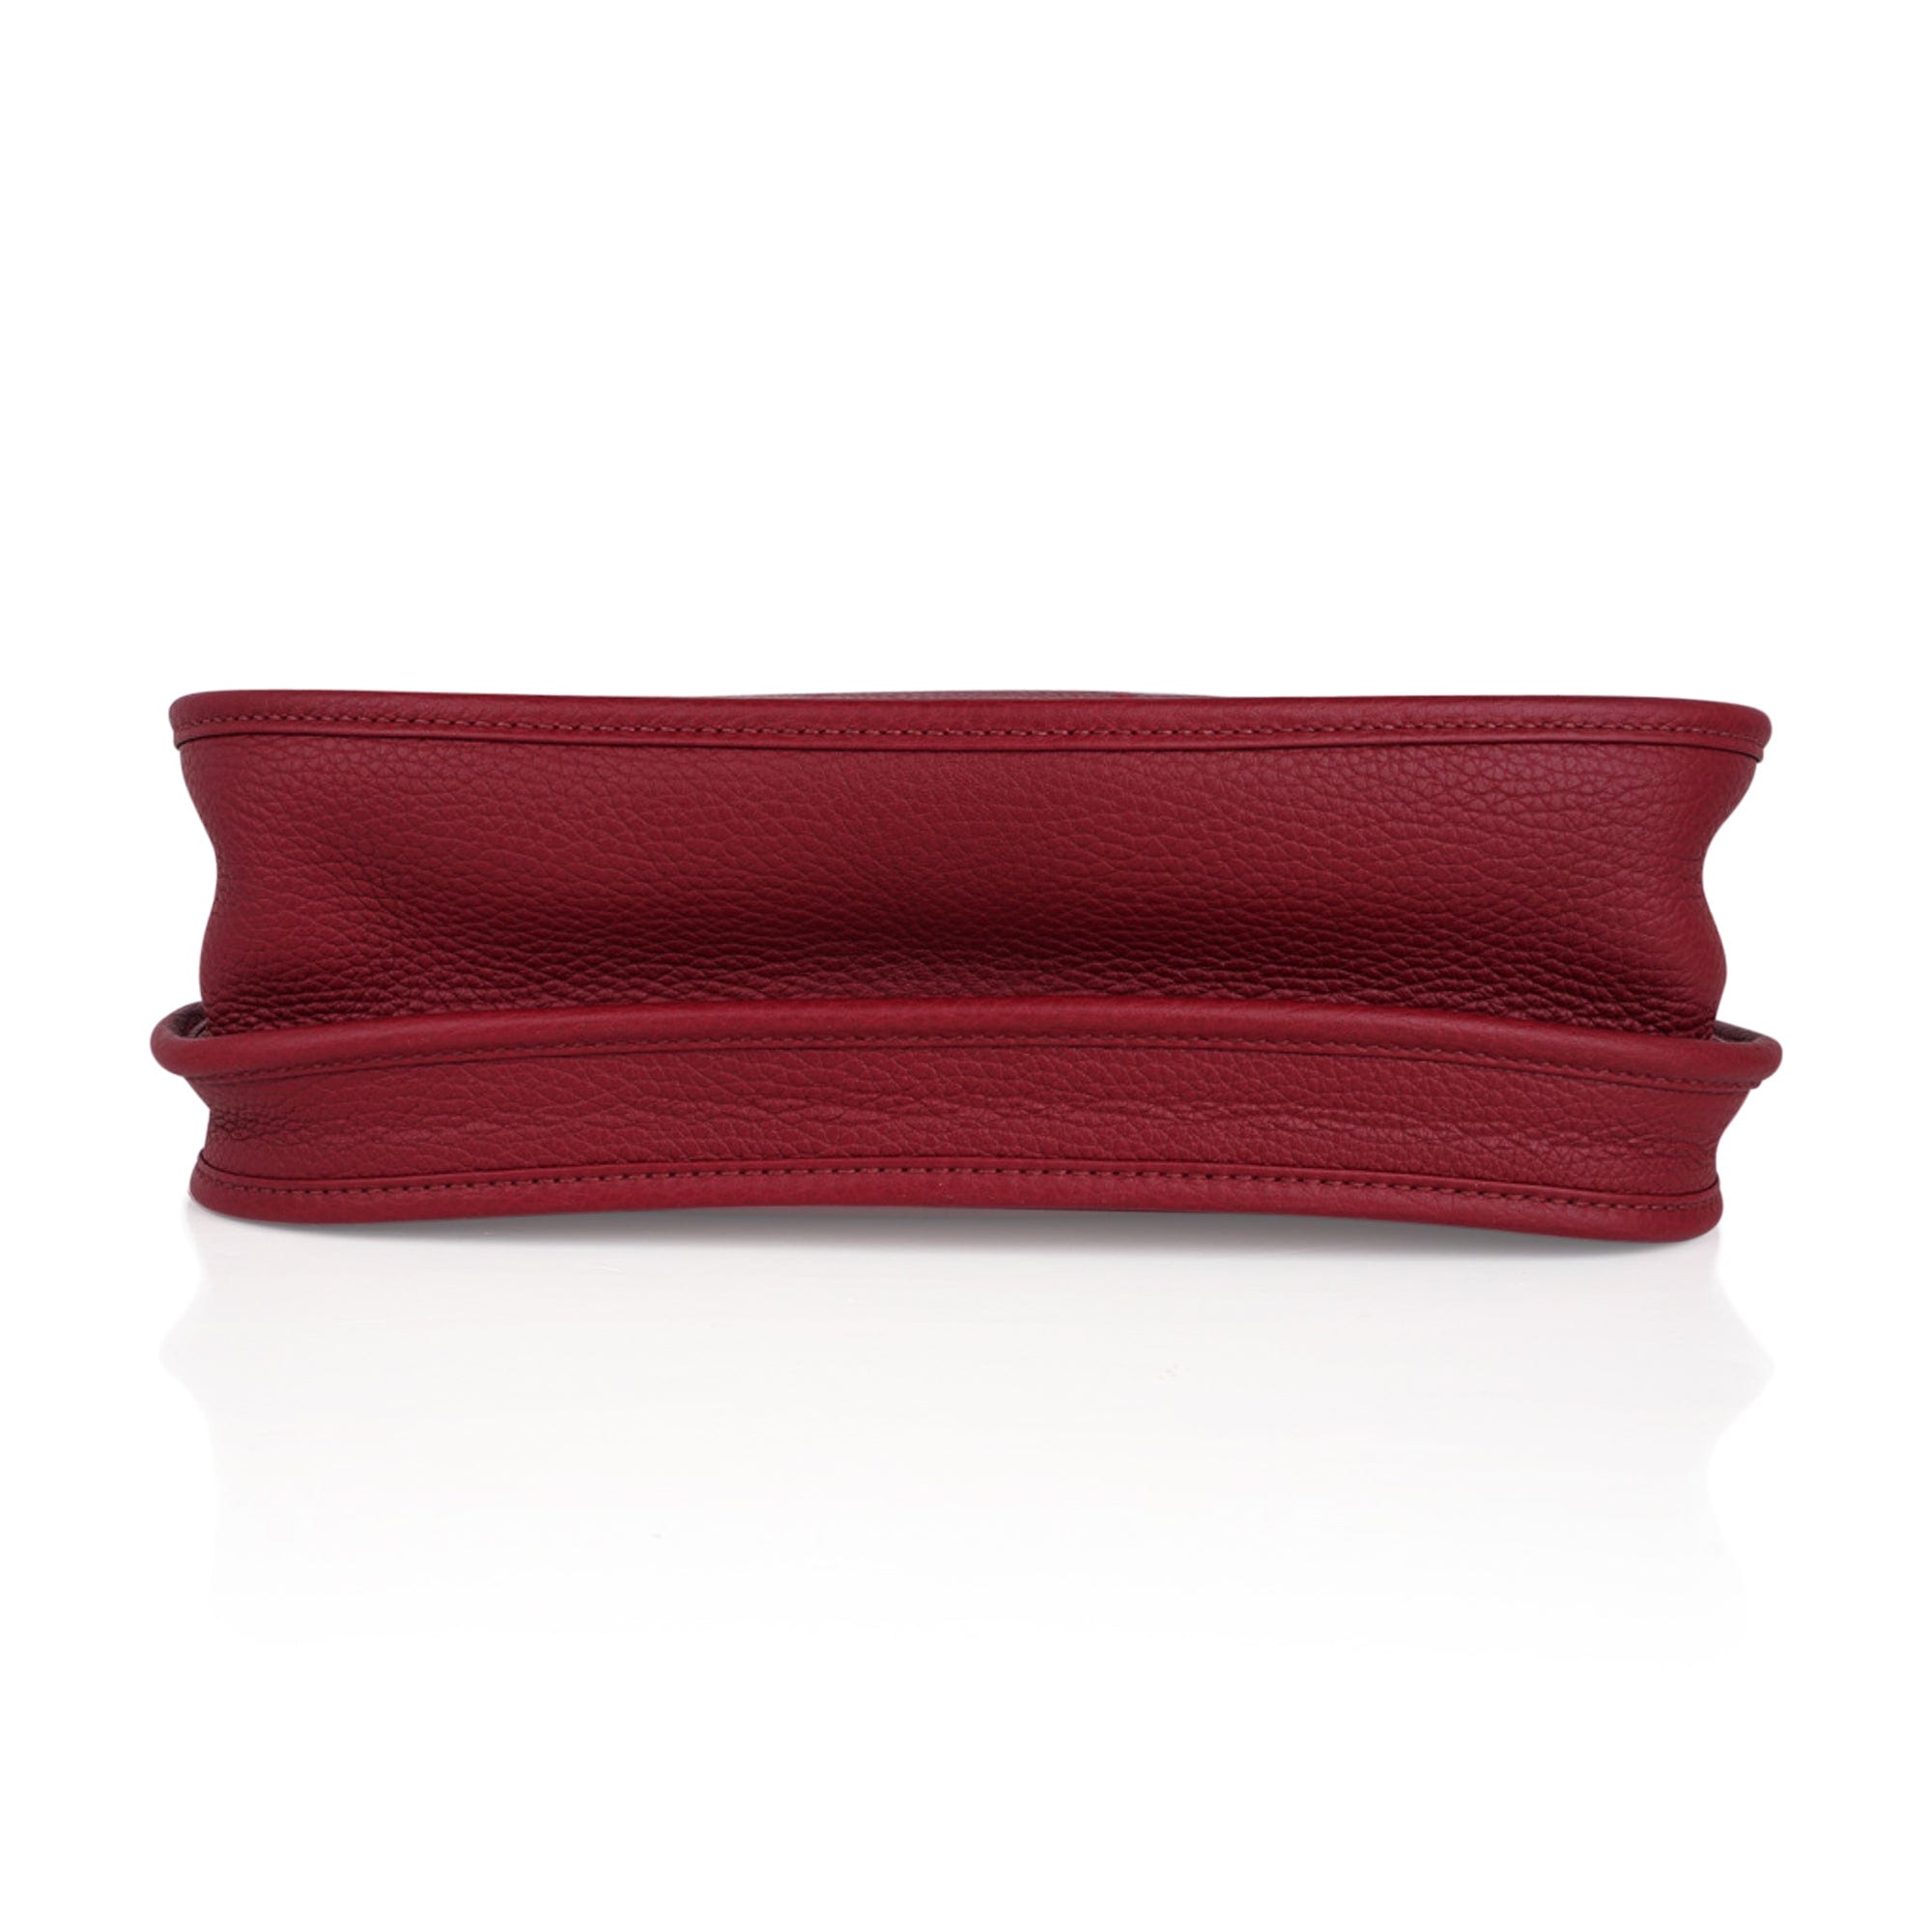 Lot - Hermes Rouge Red 'Evelyne PM' Leather Bag